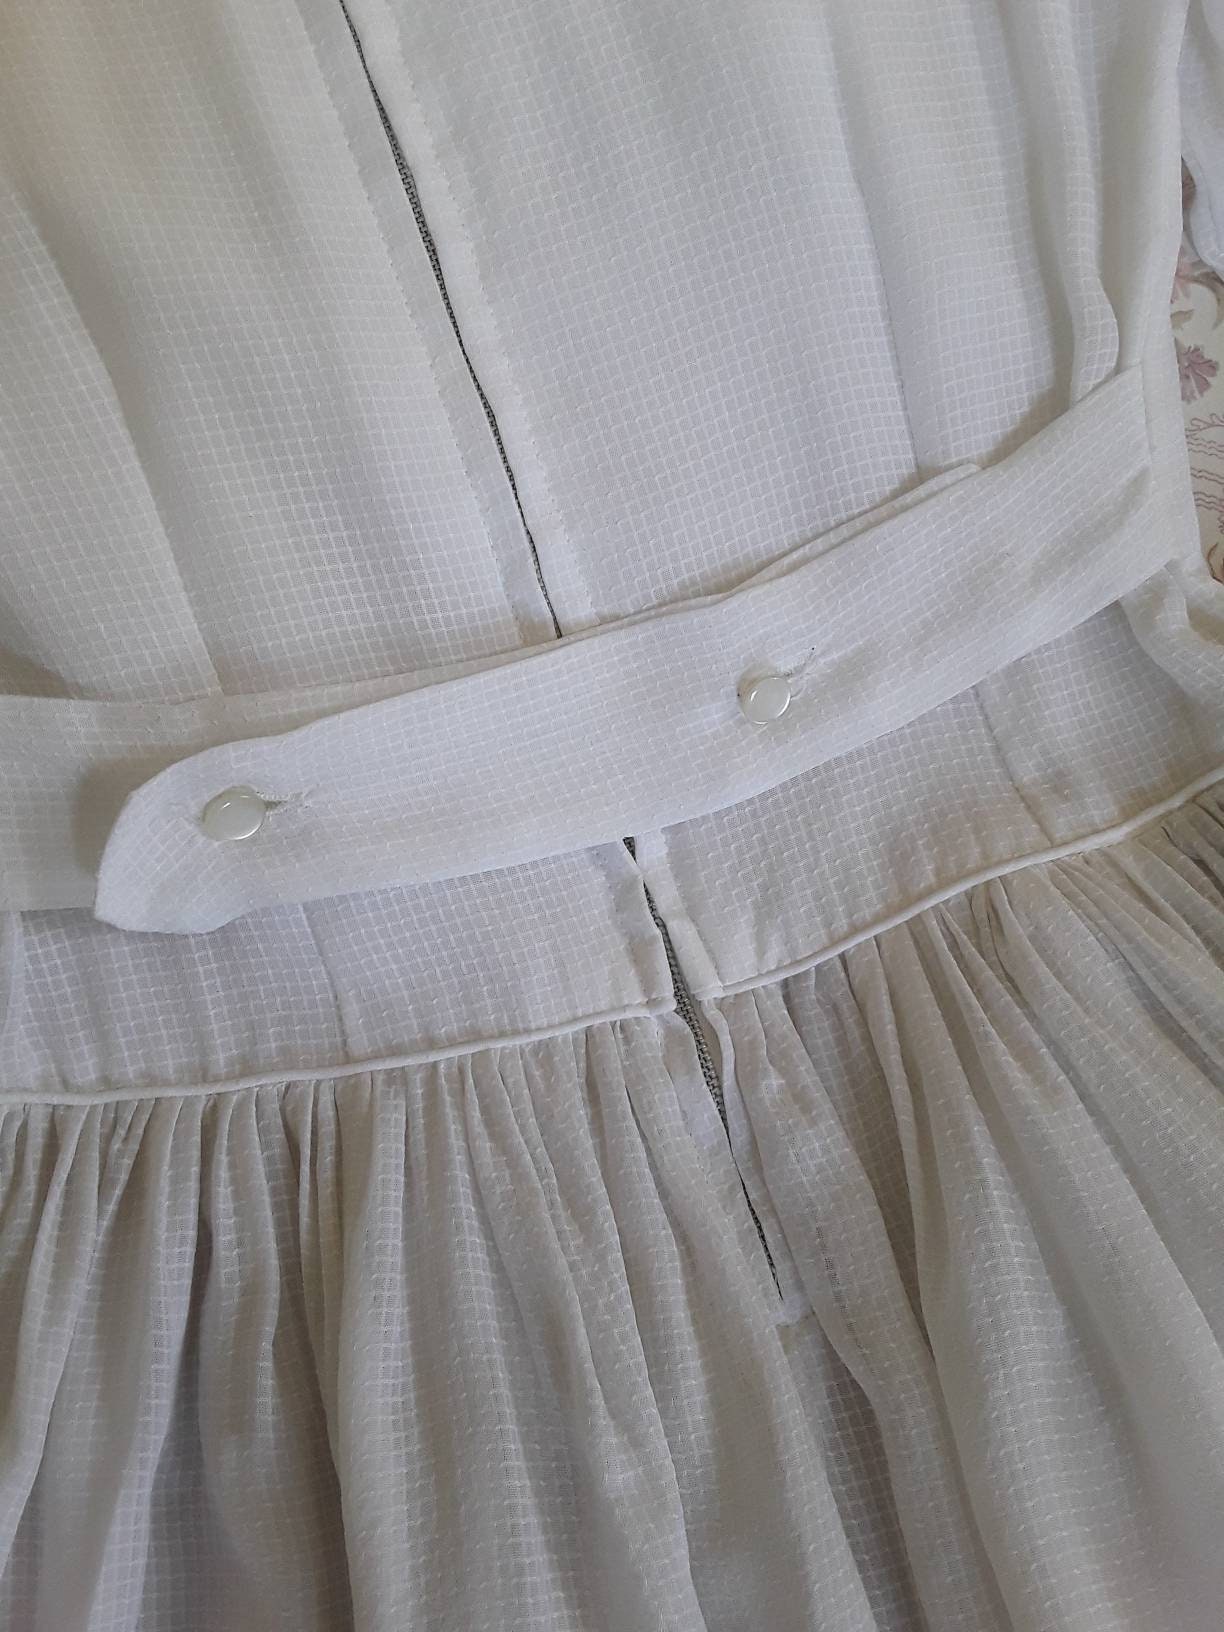 Vintage GIRLS DRESS 1950s White Polyester Lace Trim Dress | Etsy